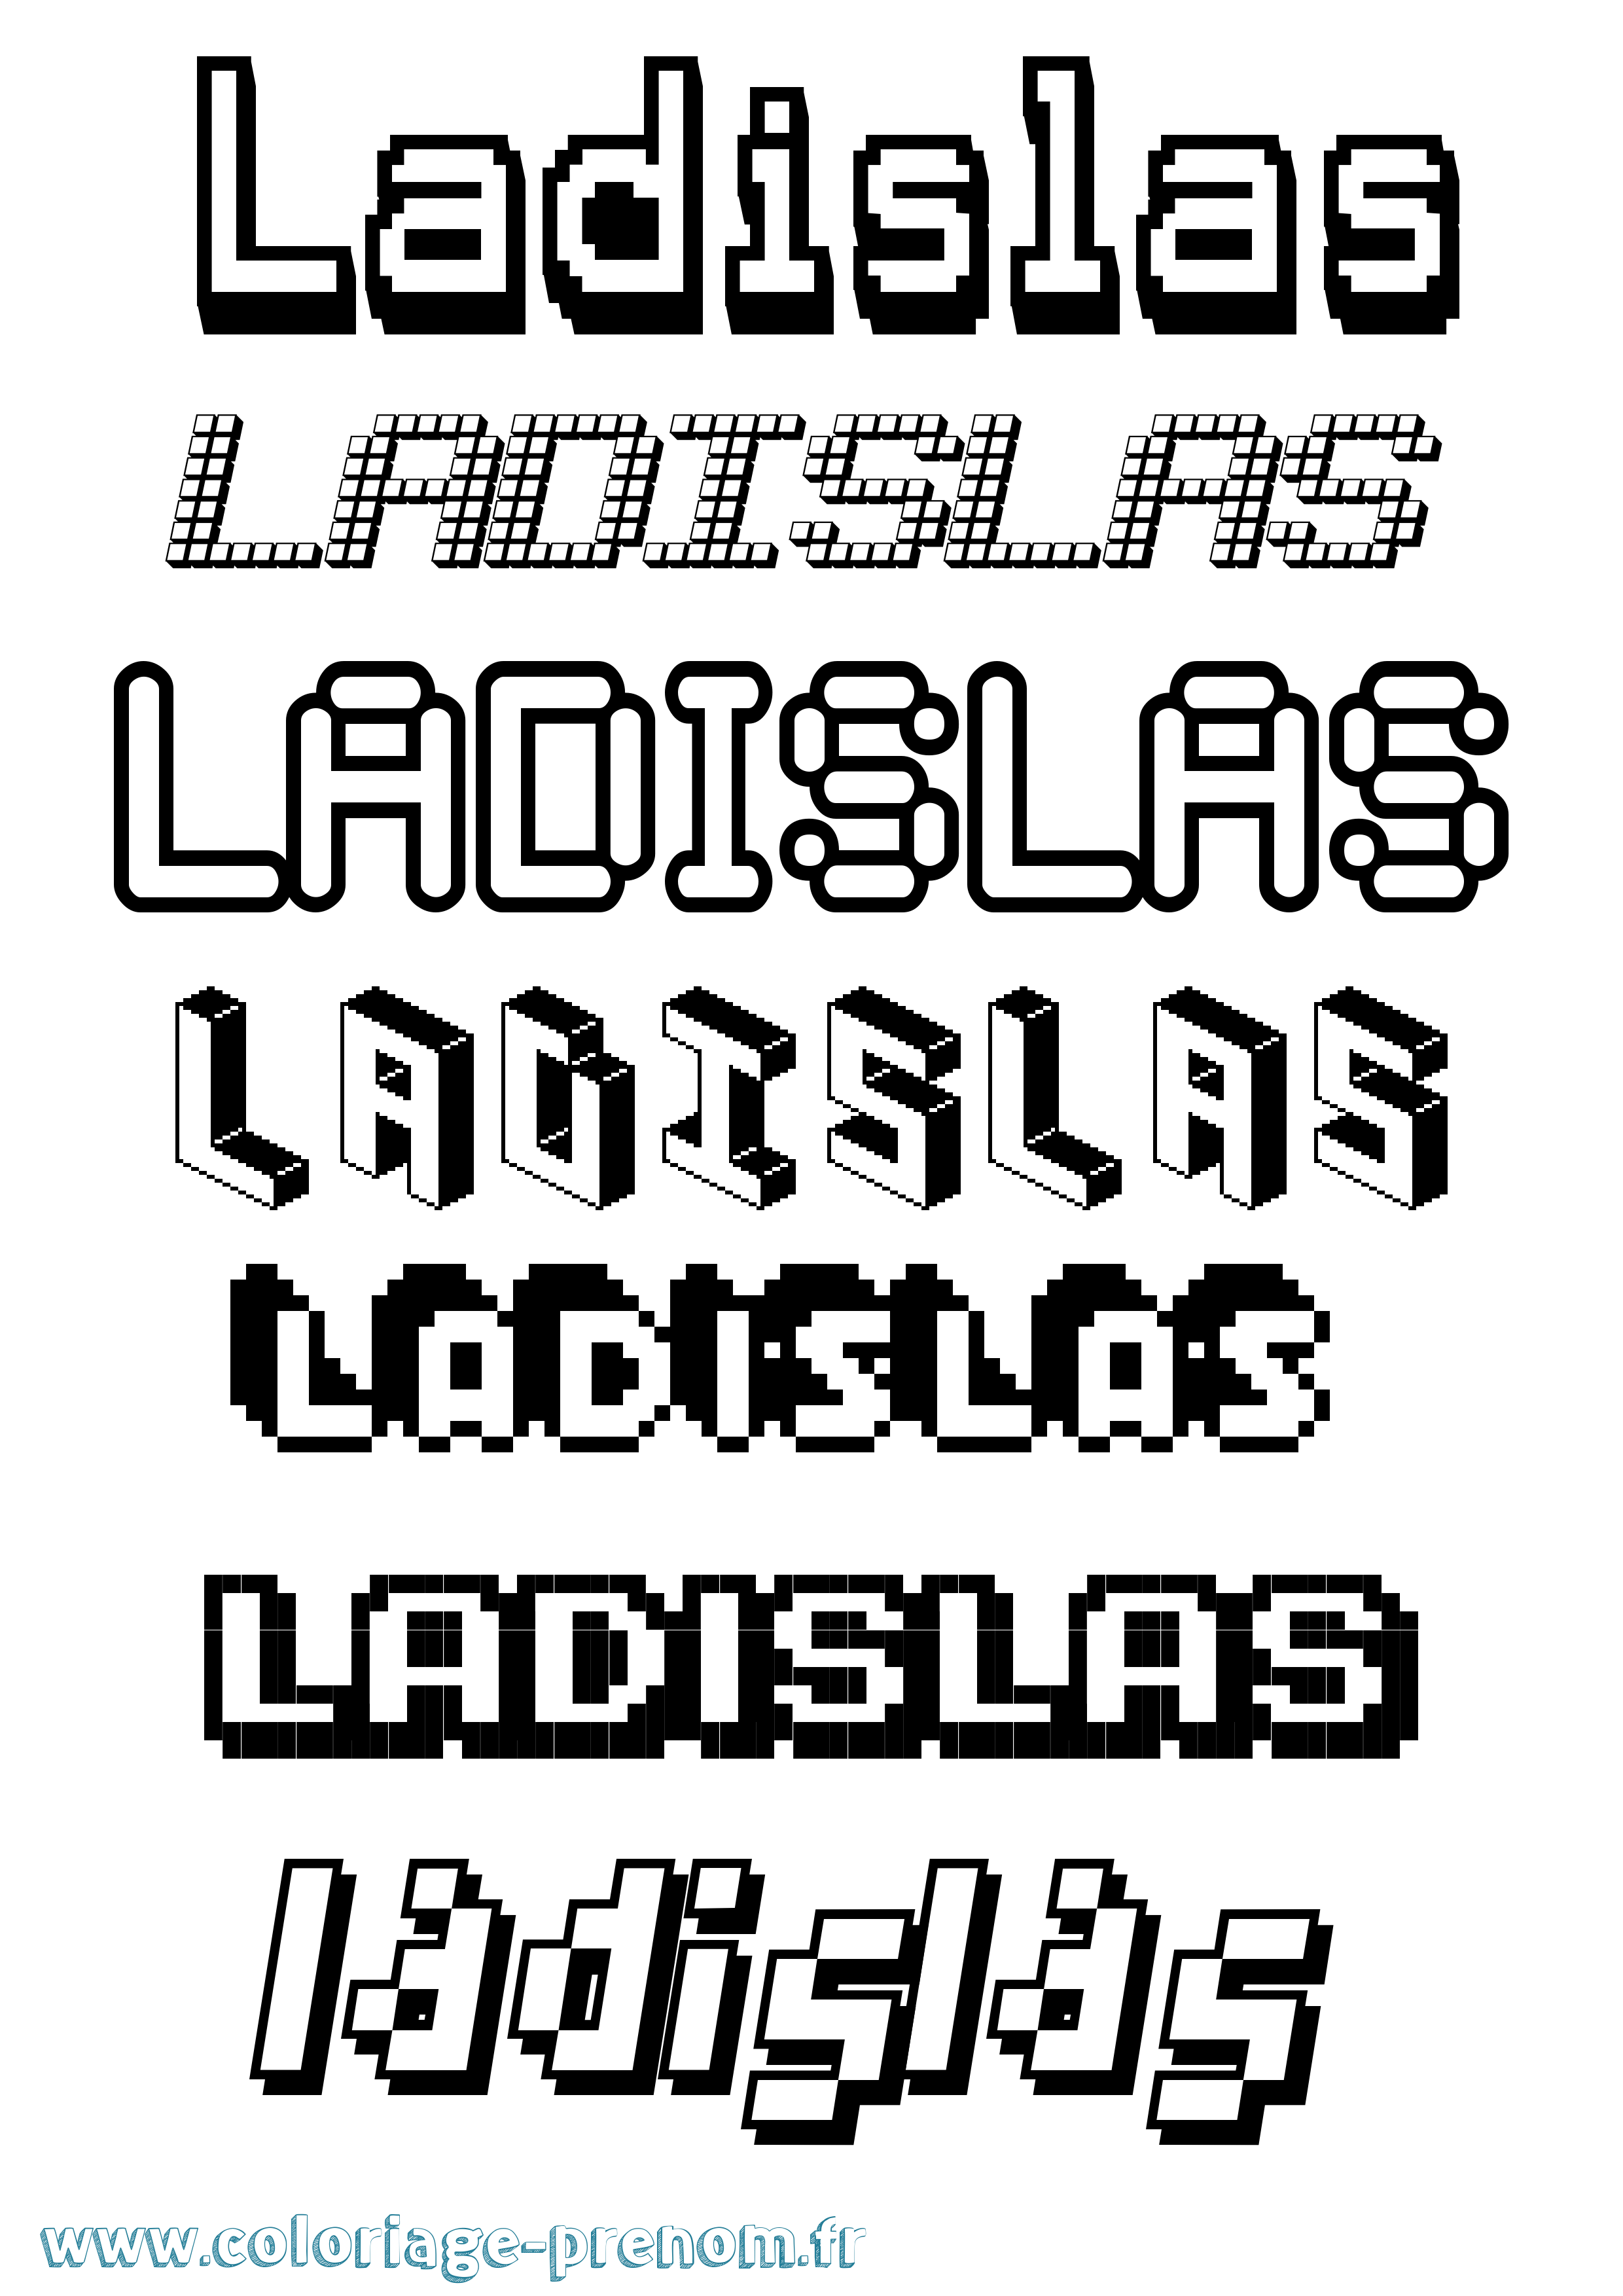 Coloriage prénom Ladislas Pixel